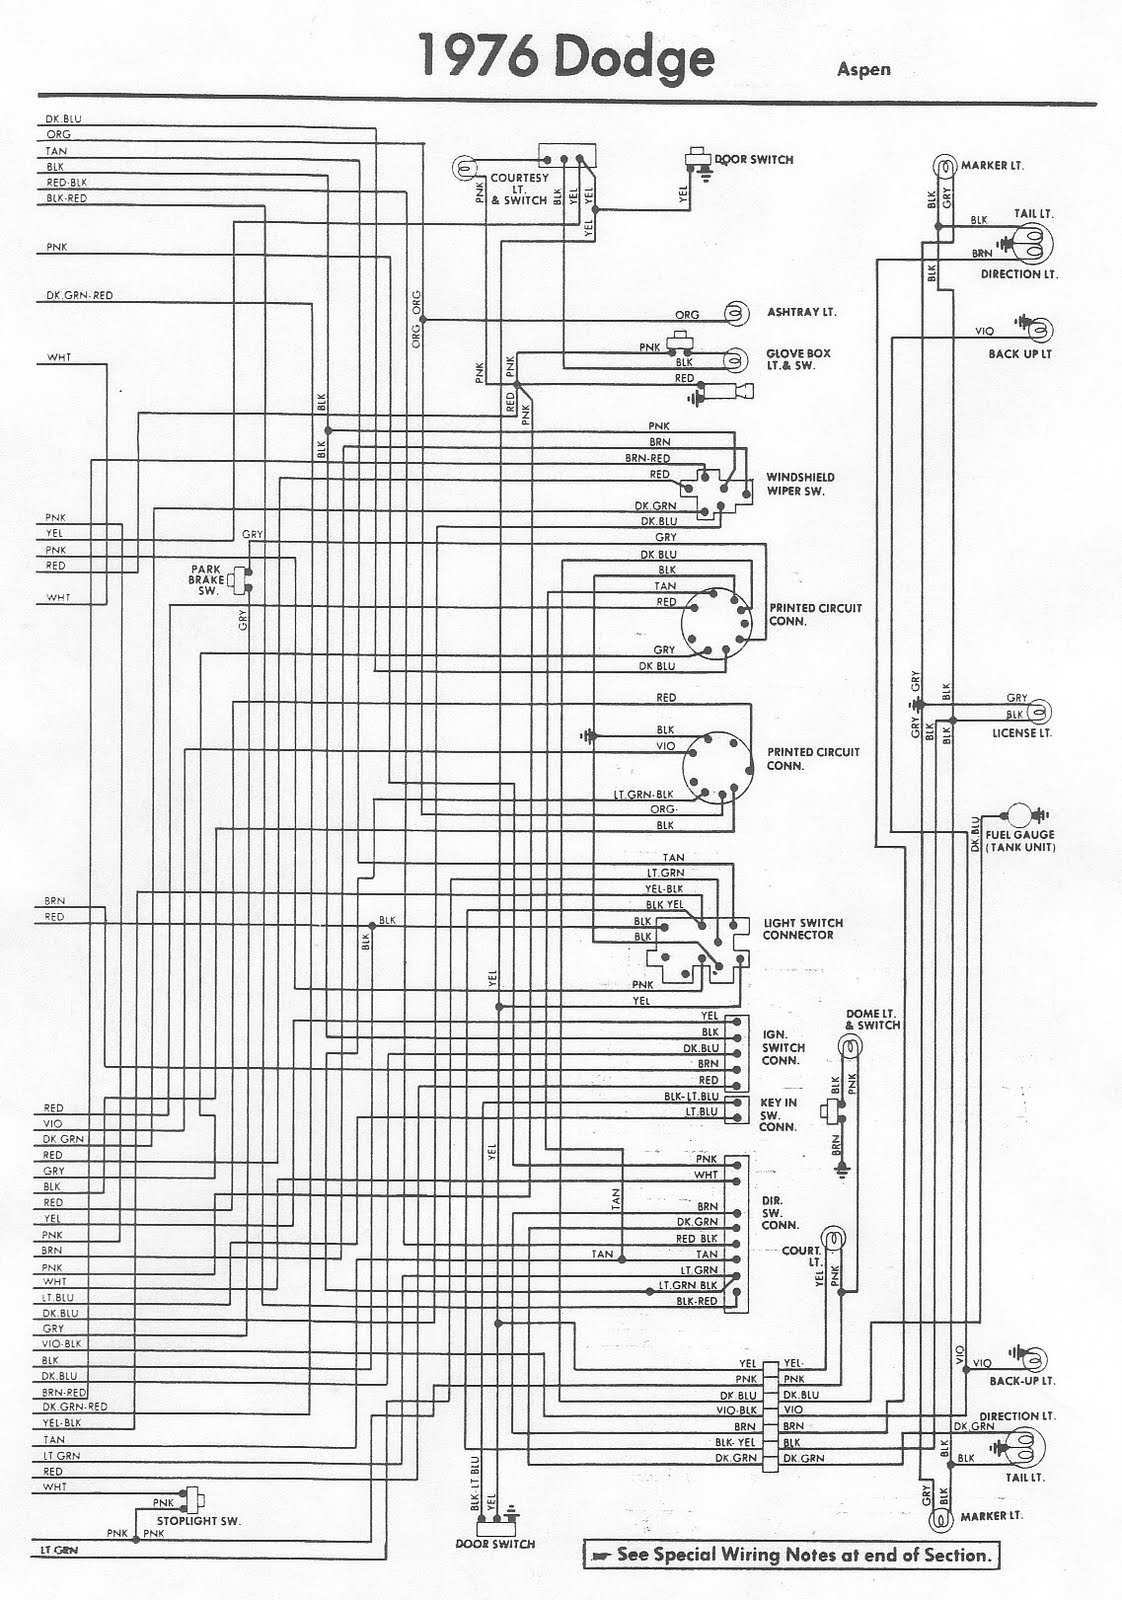 Free Auto Wiring Diagram: 1976 Dodge Aspen Rear Section Wiring Diagram